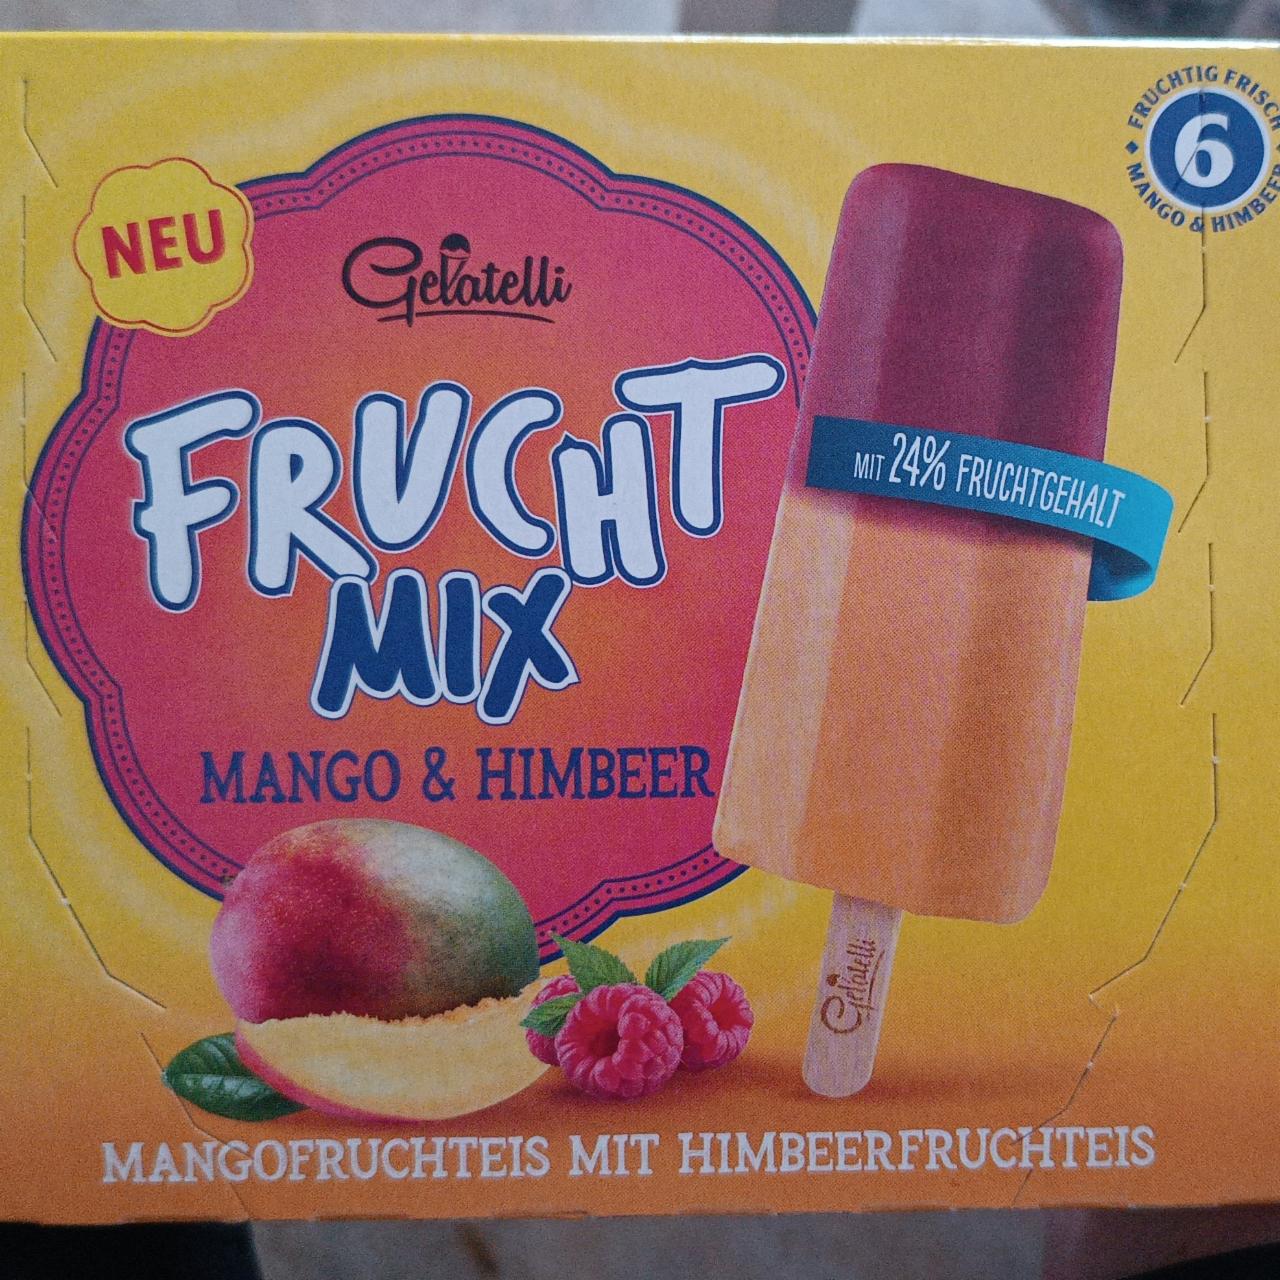 Fotografie - Frucht Mix Mango & Himbeer Gelatelli